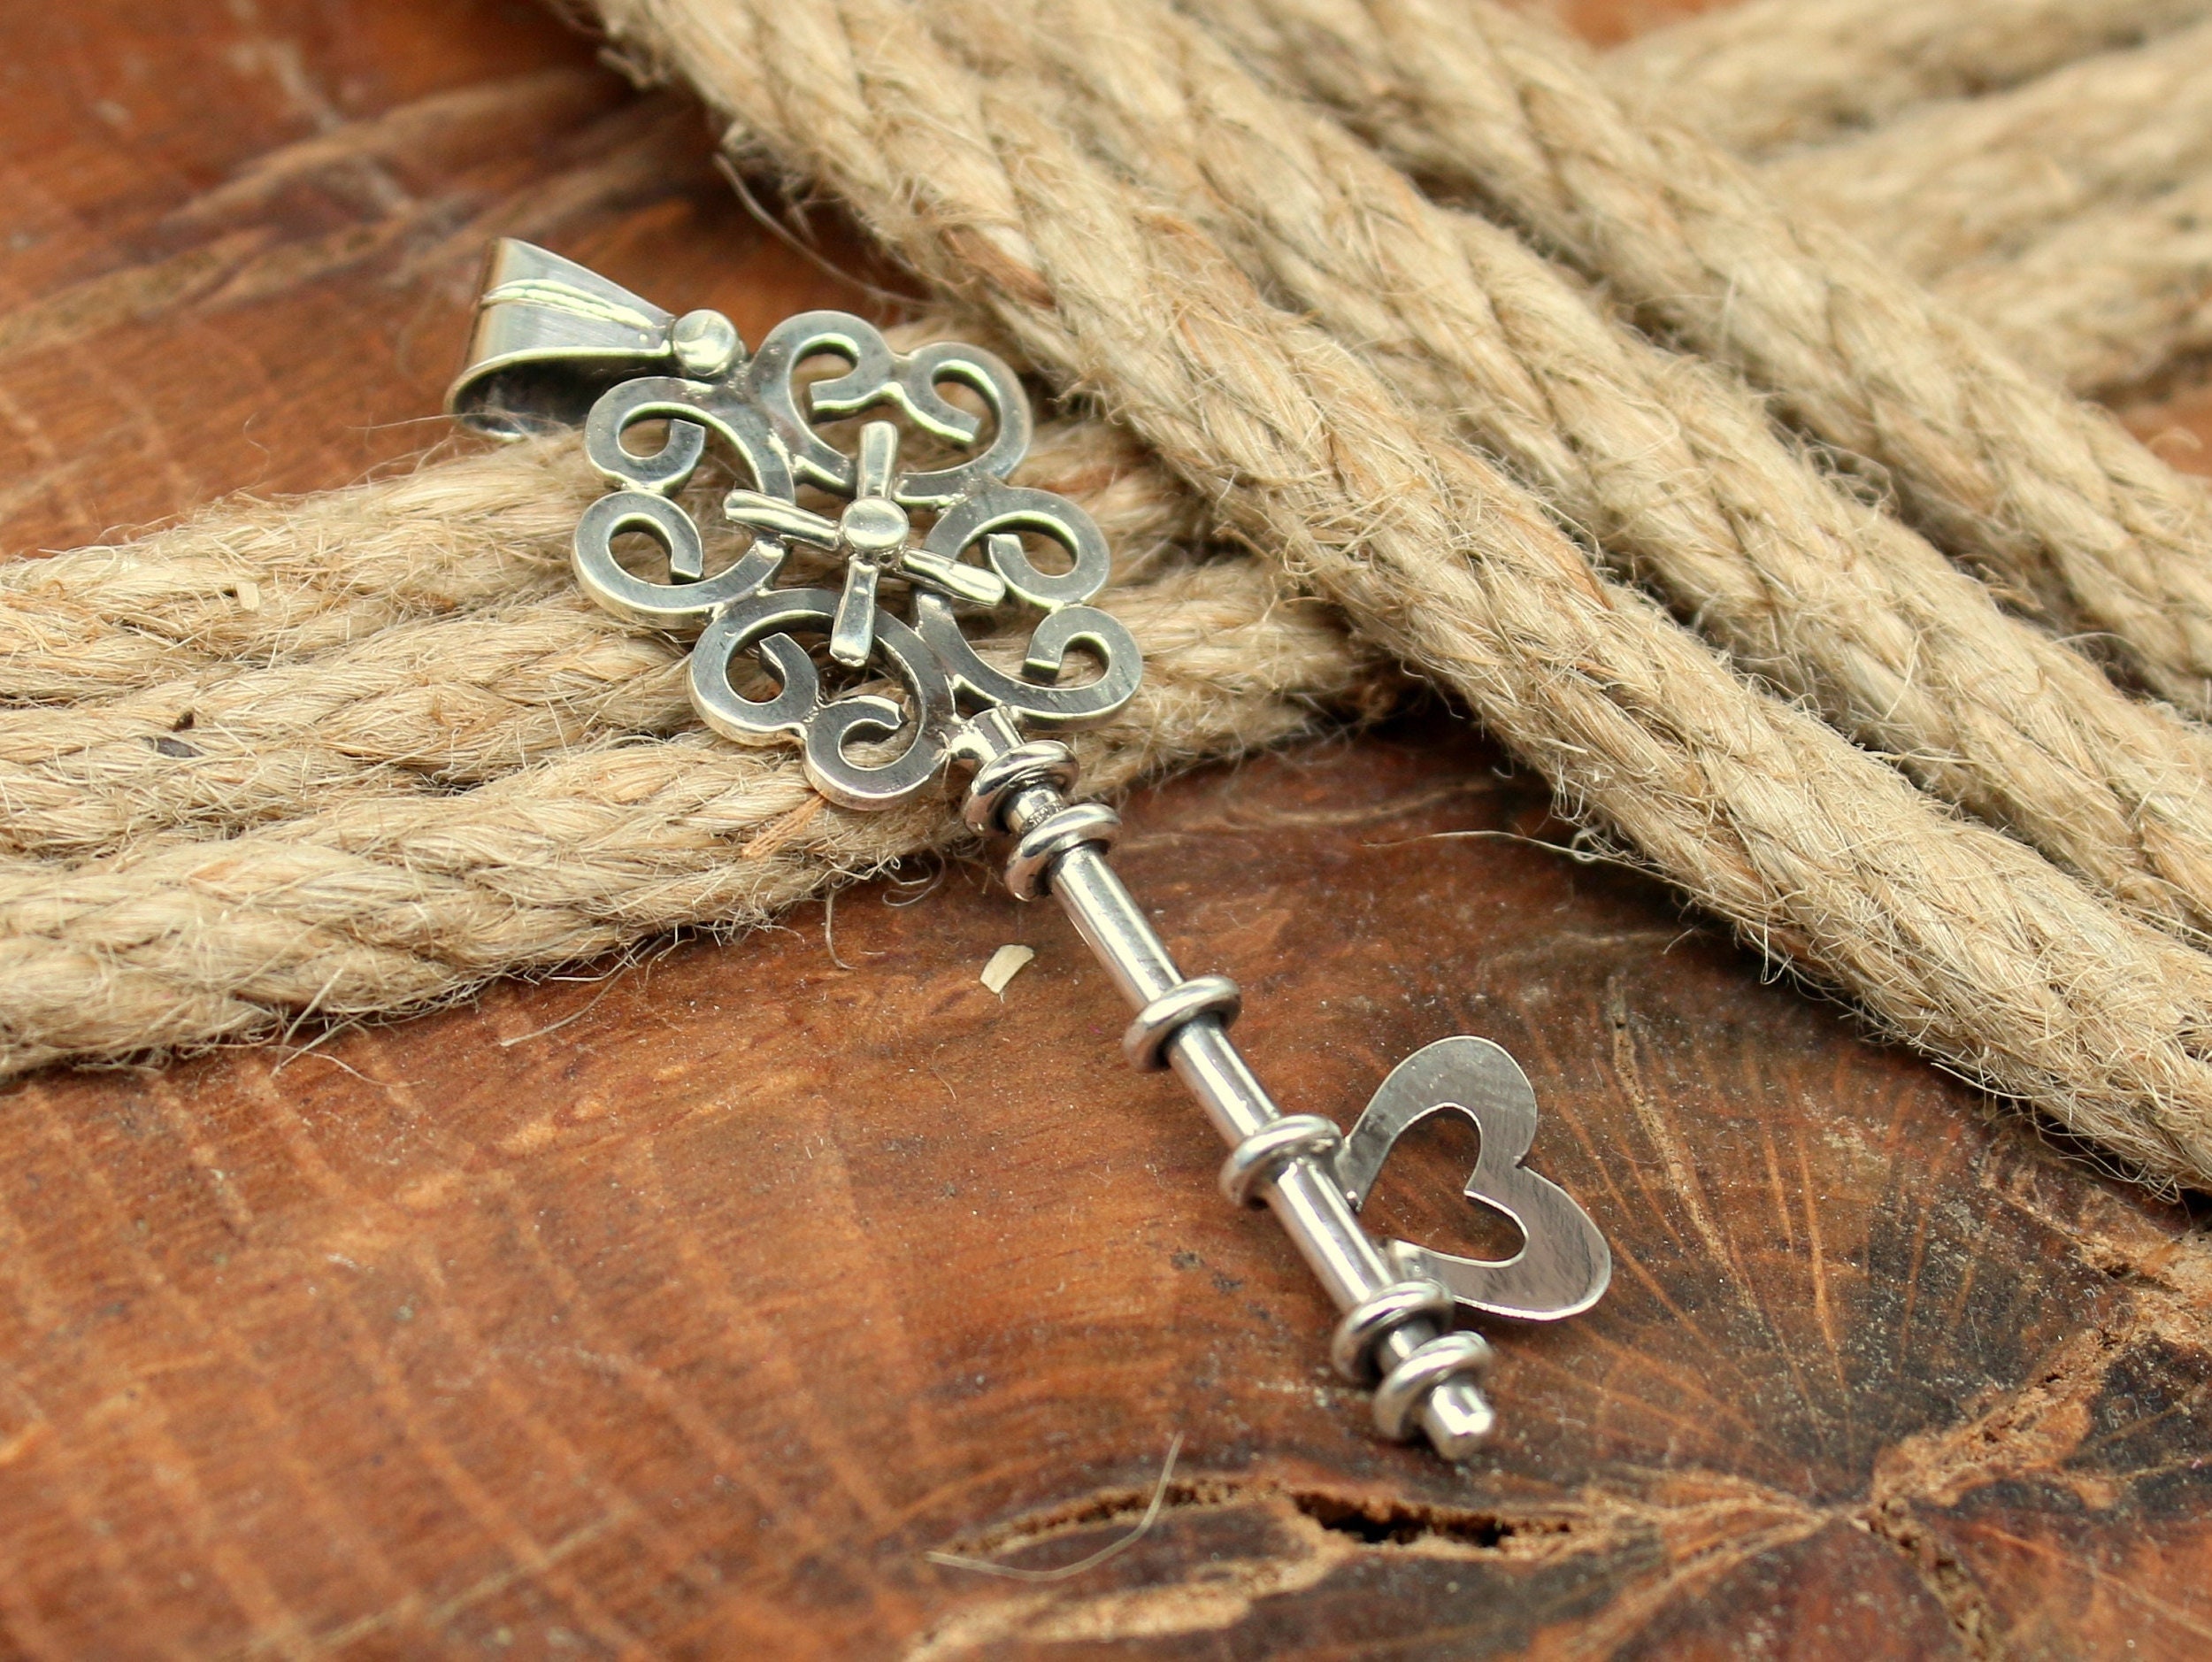 5pcs Girls Lock & Key Pendant Necklace